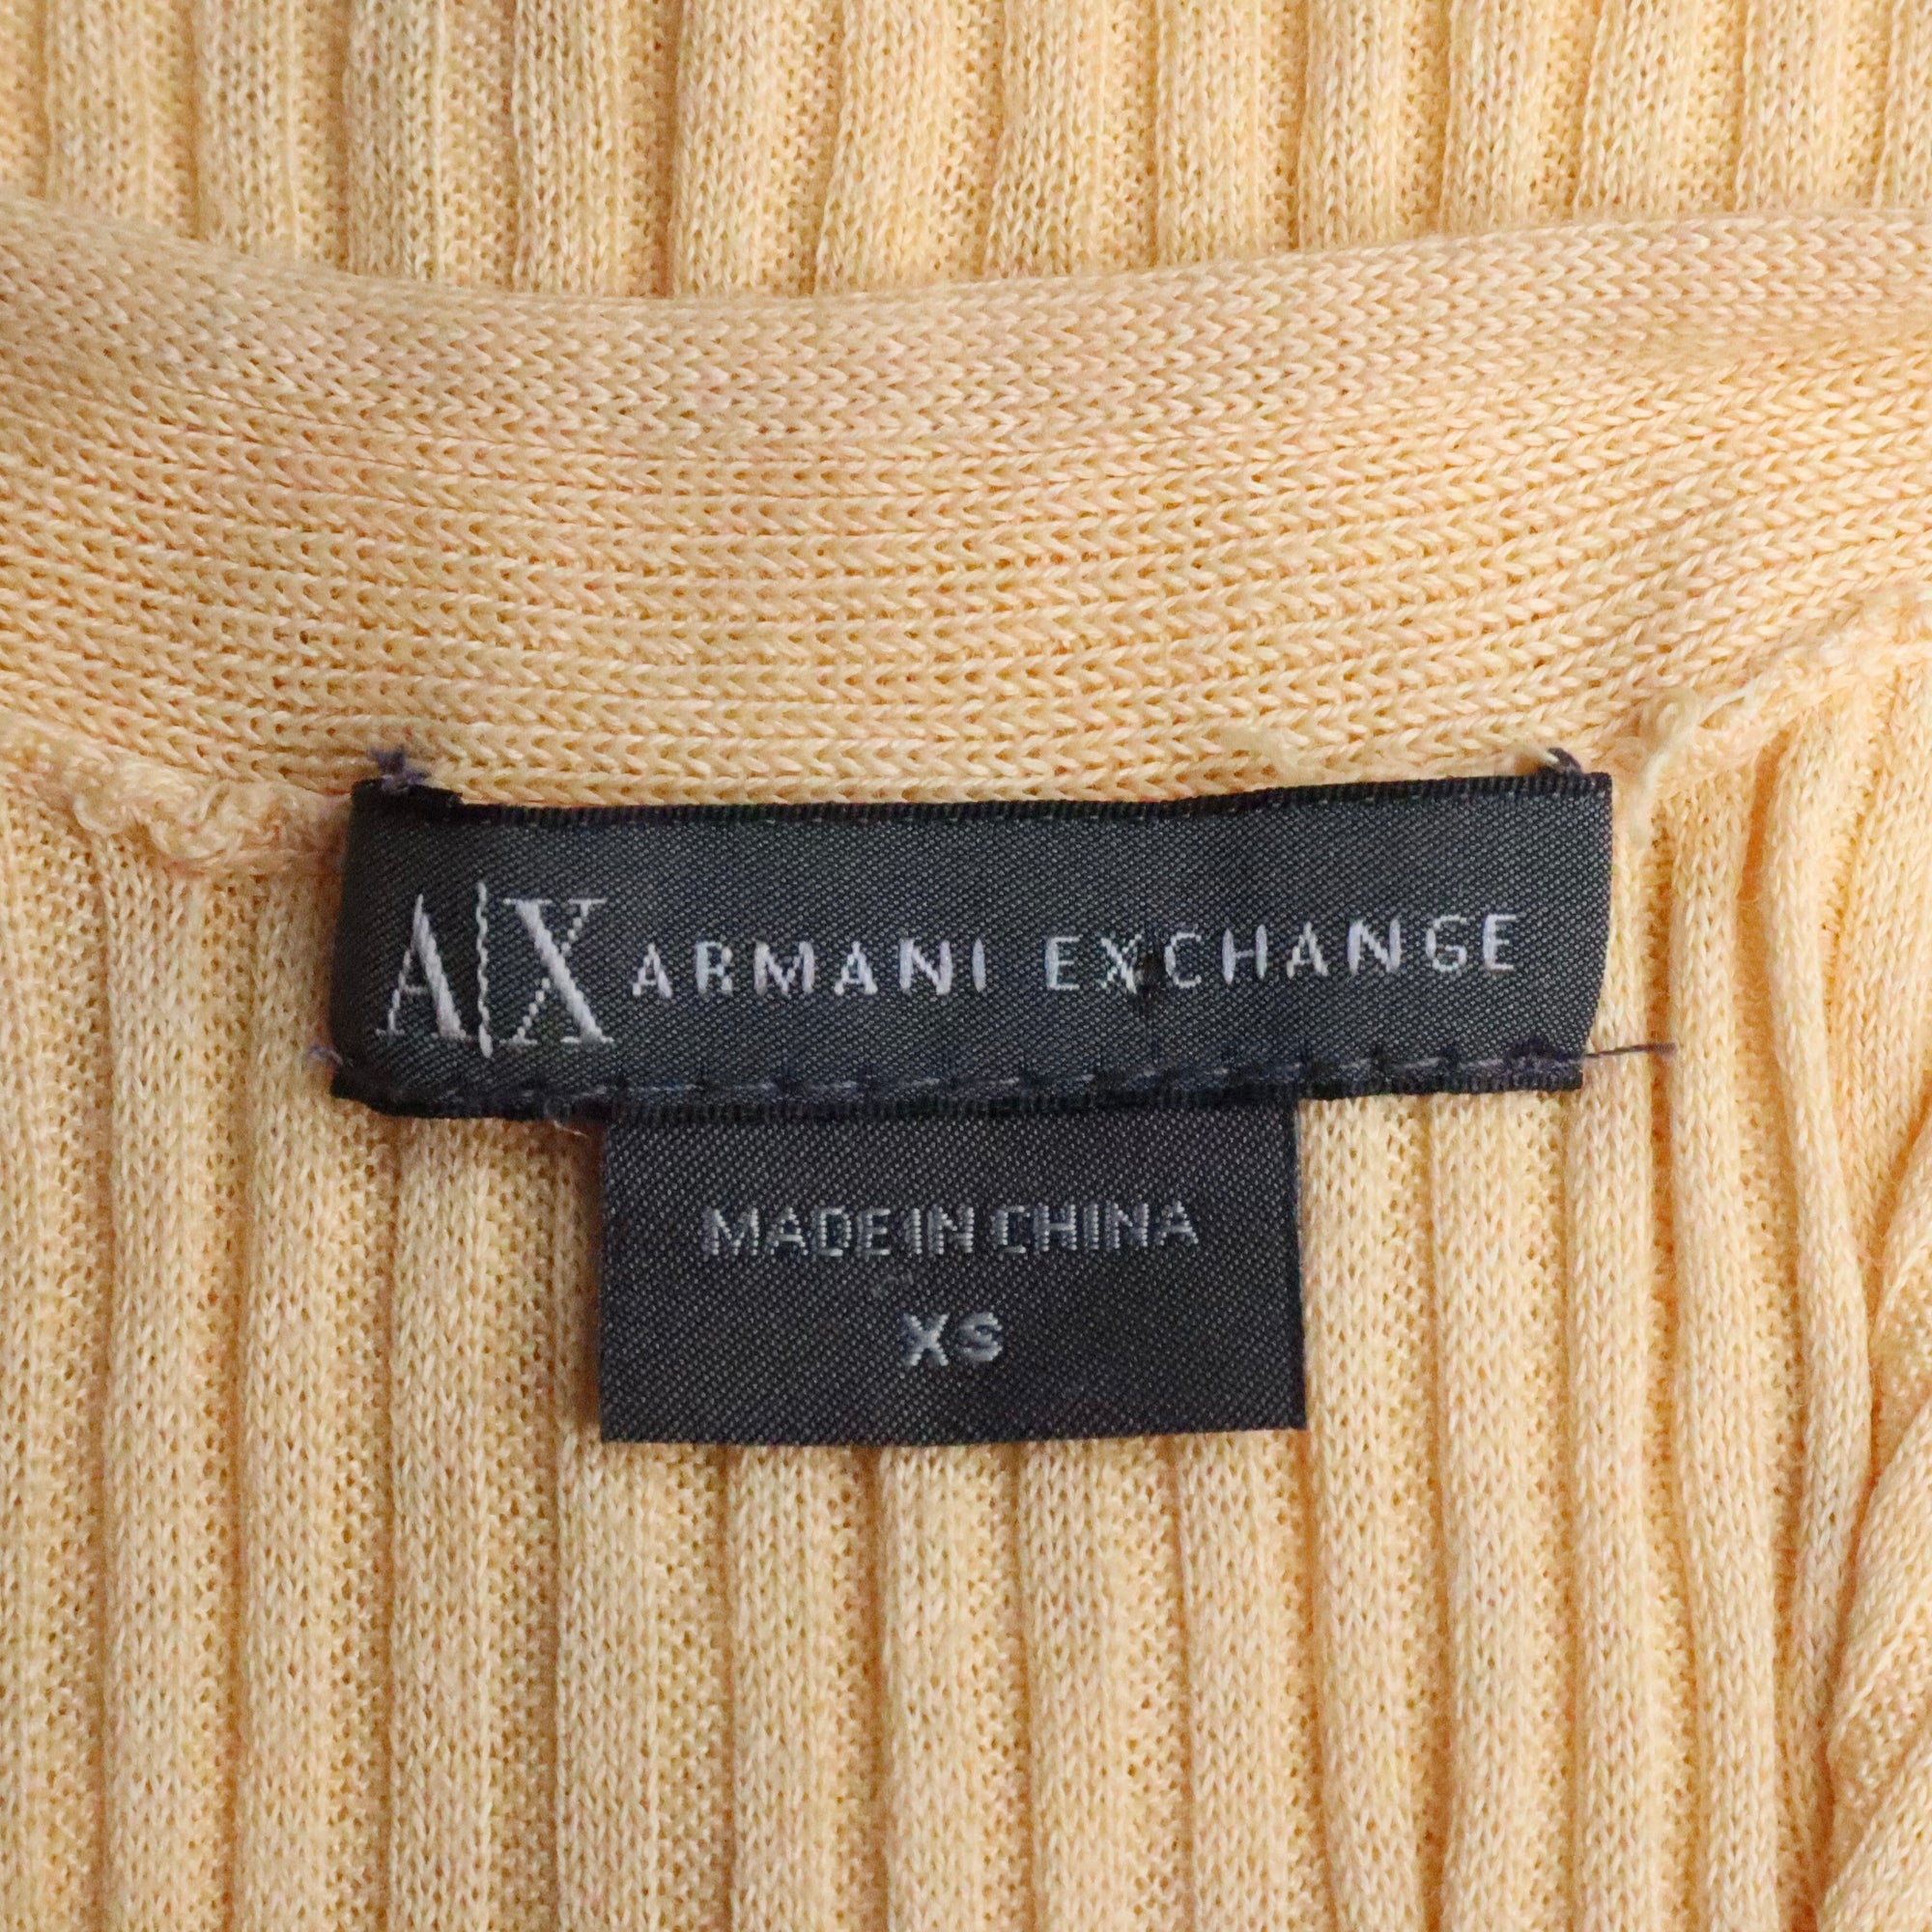 Armani Pastel Orange Silk Top (XS)